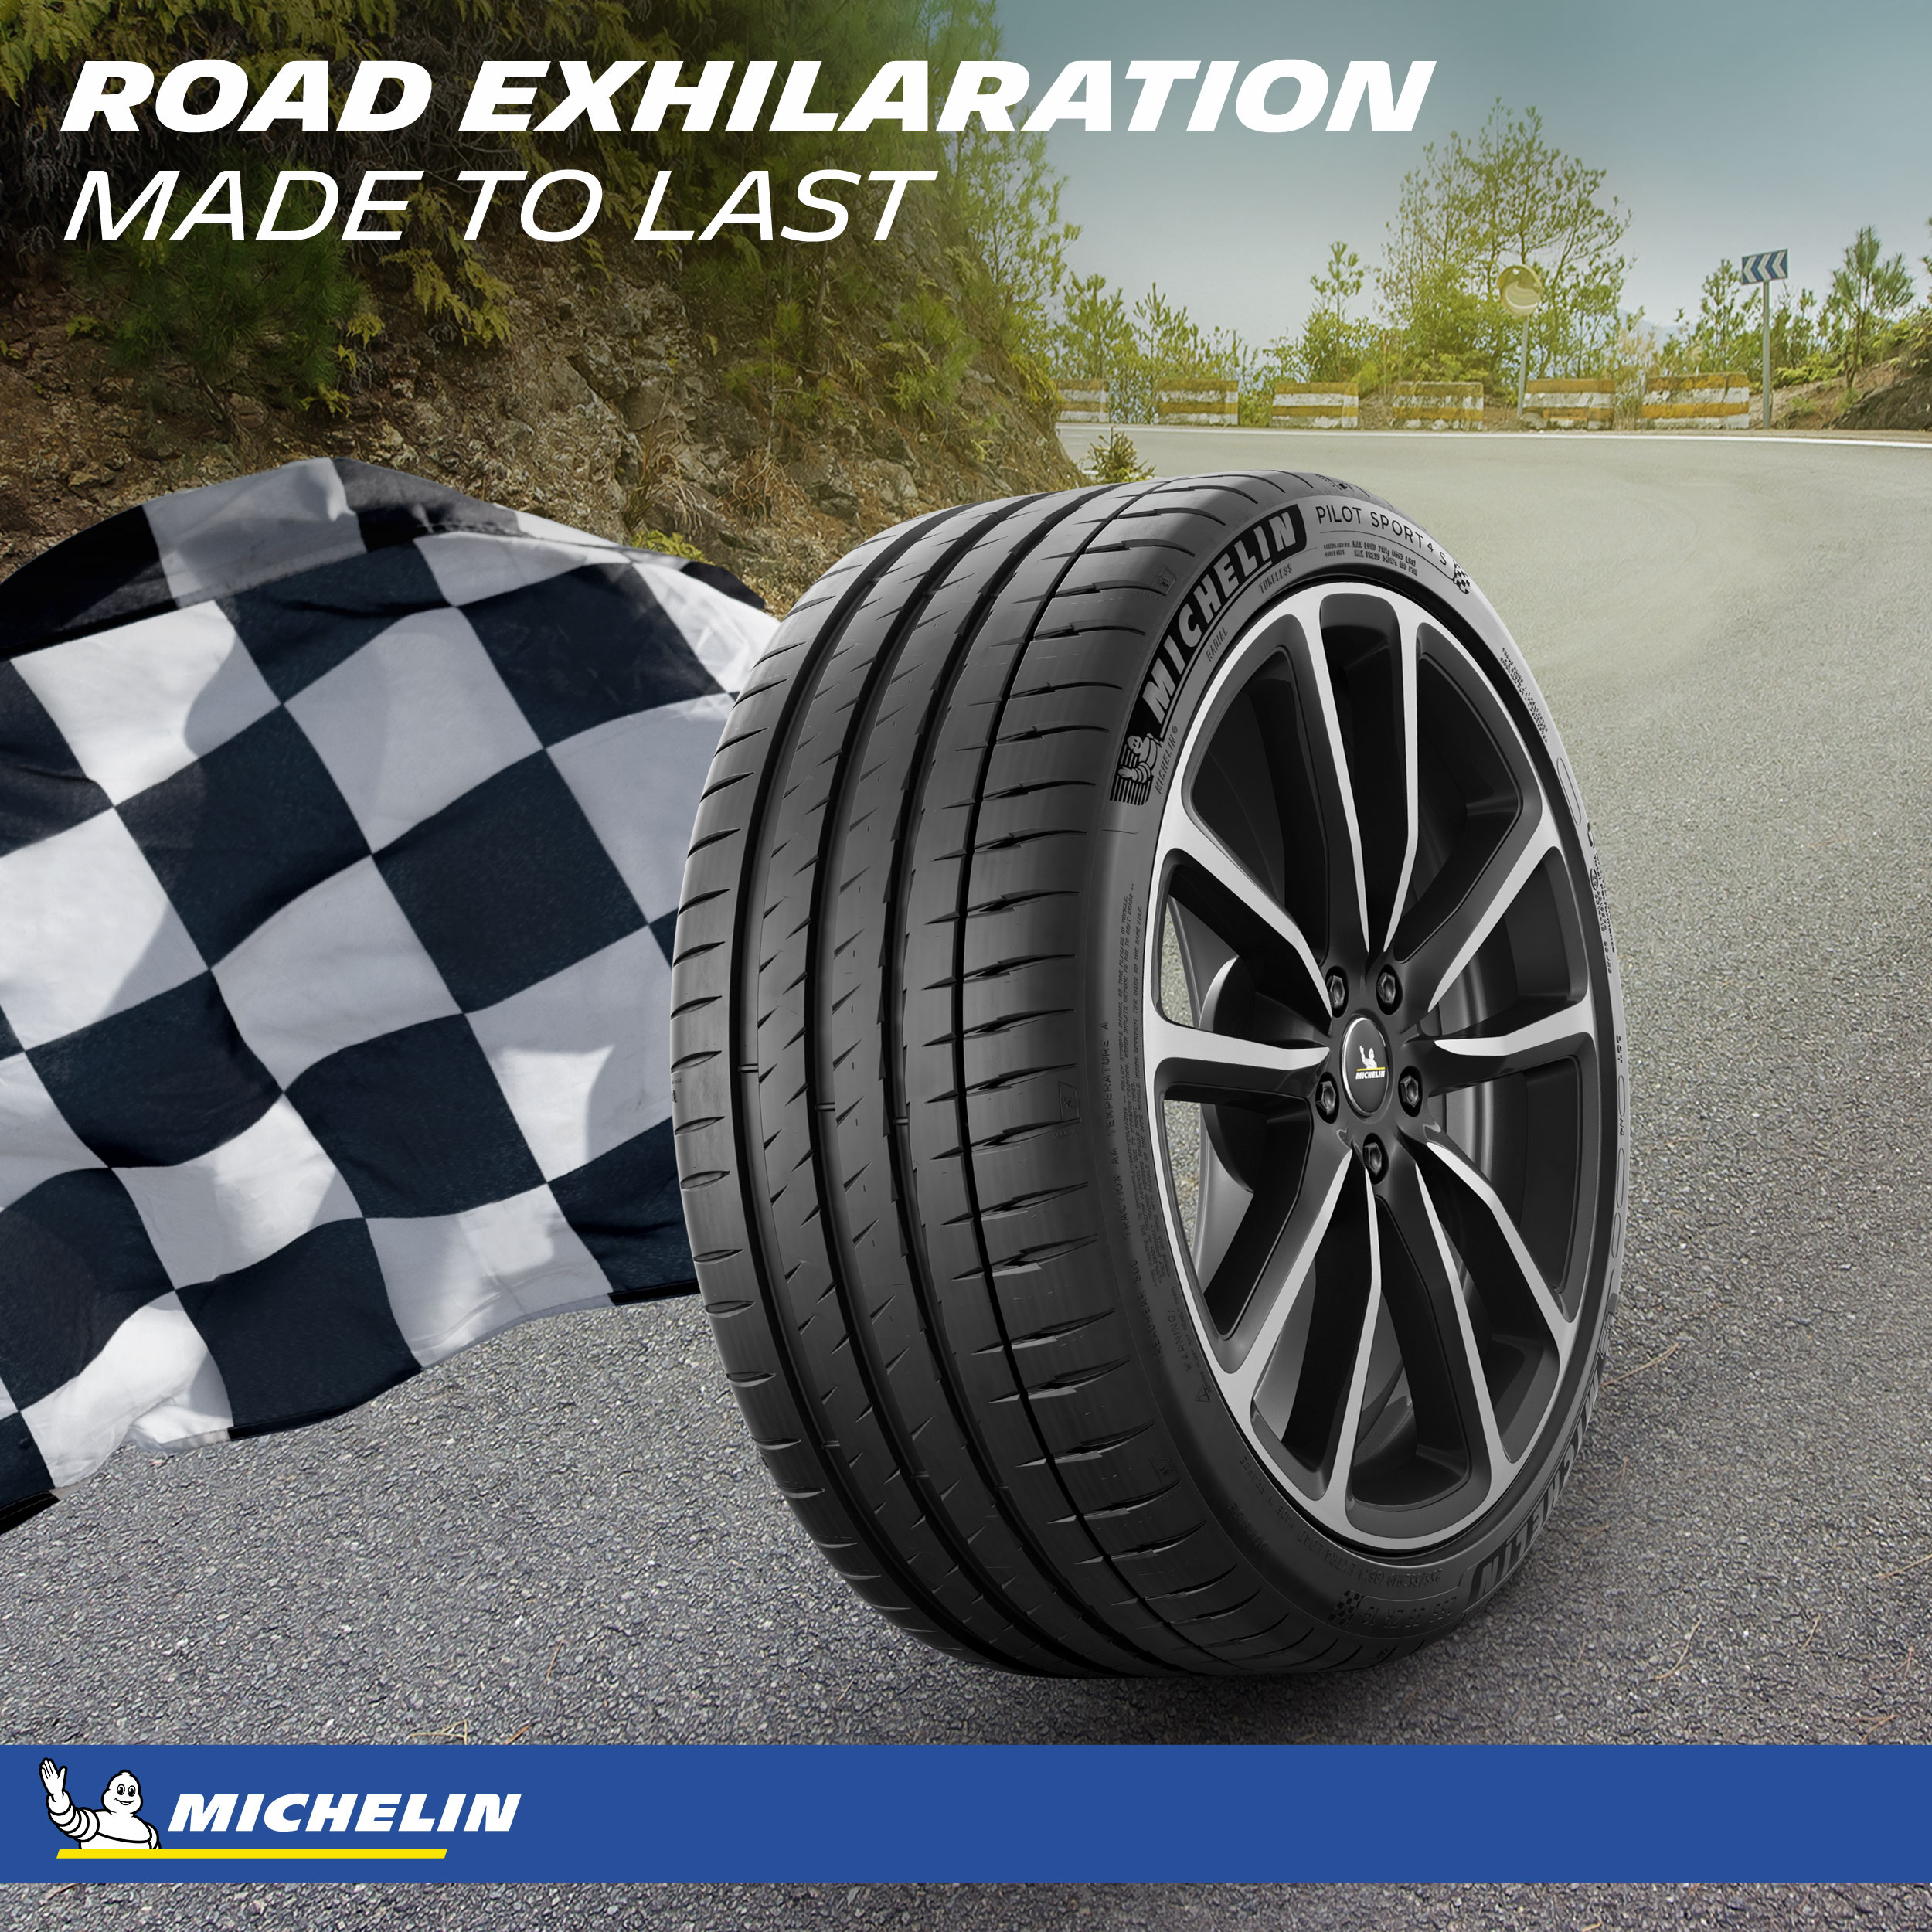 Michelin Pilot Sport 4S Performance 255/35ZR18 (94Y) XL Passenger Tire - image 3 of 5